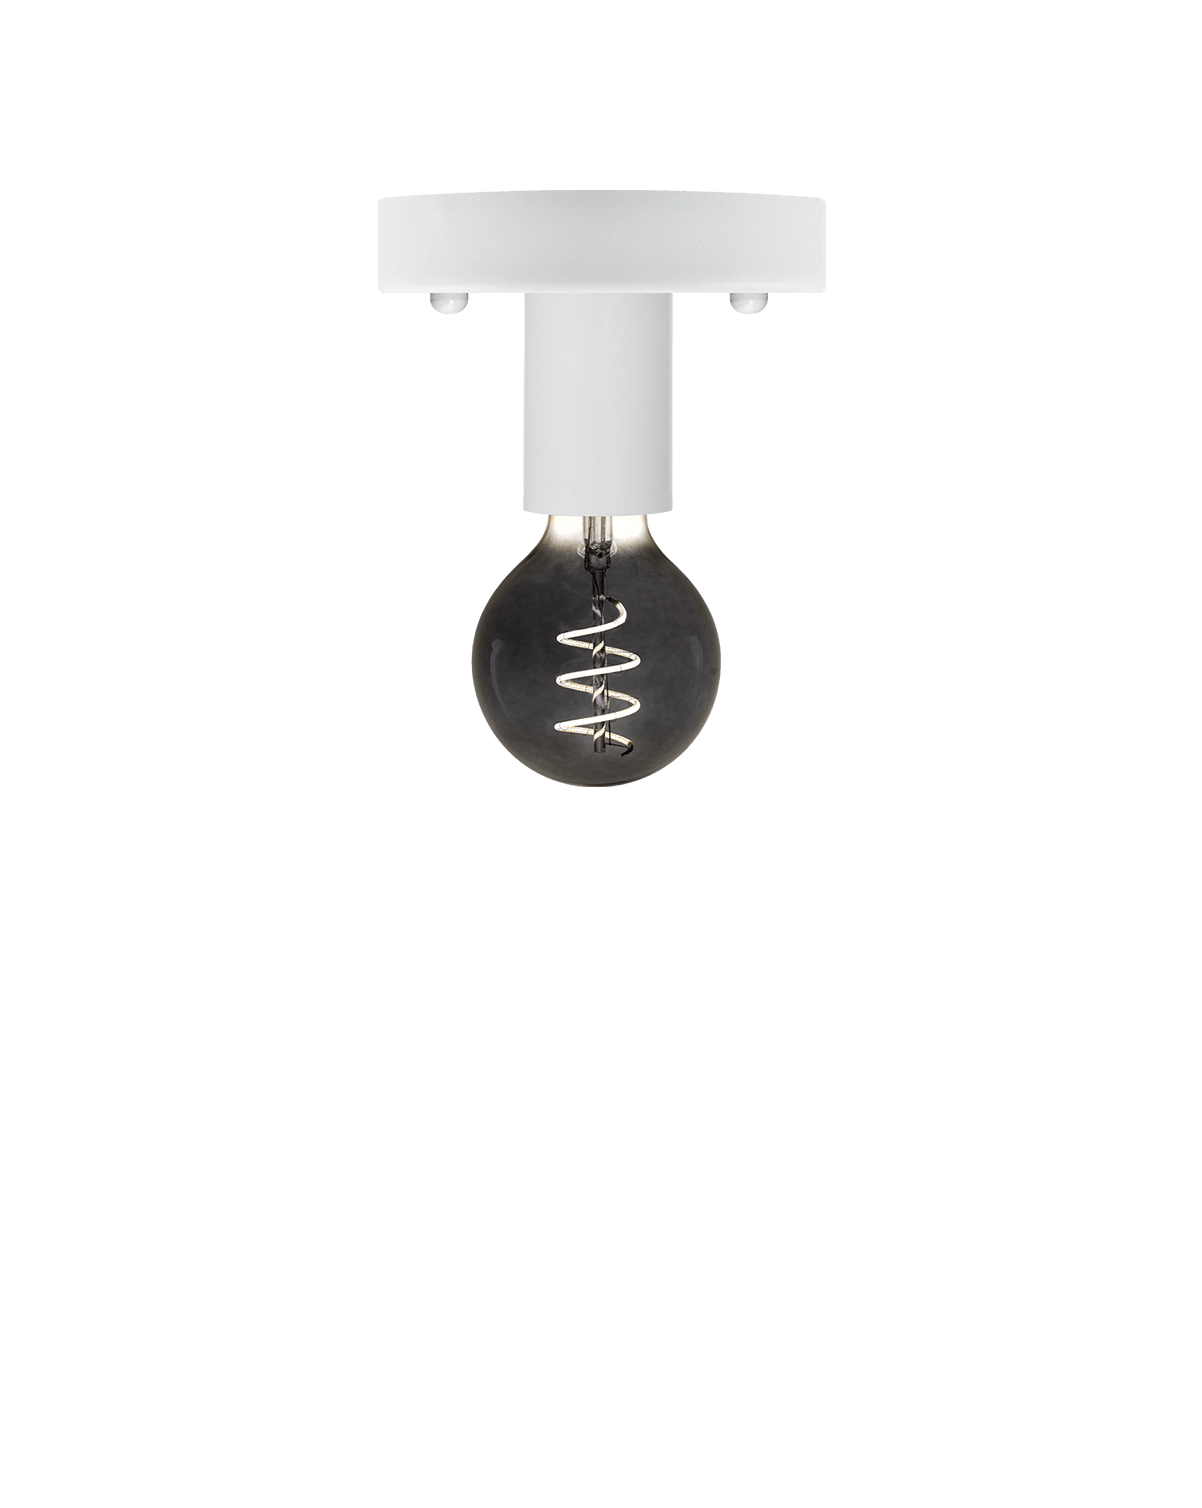 Flush mount light fixture with a white base and a distinctive black bulb with a unique filament design